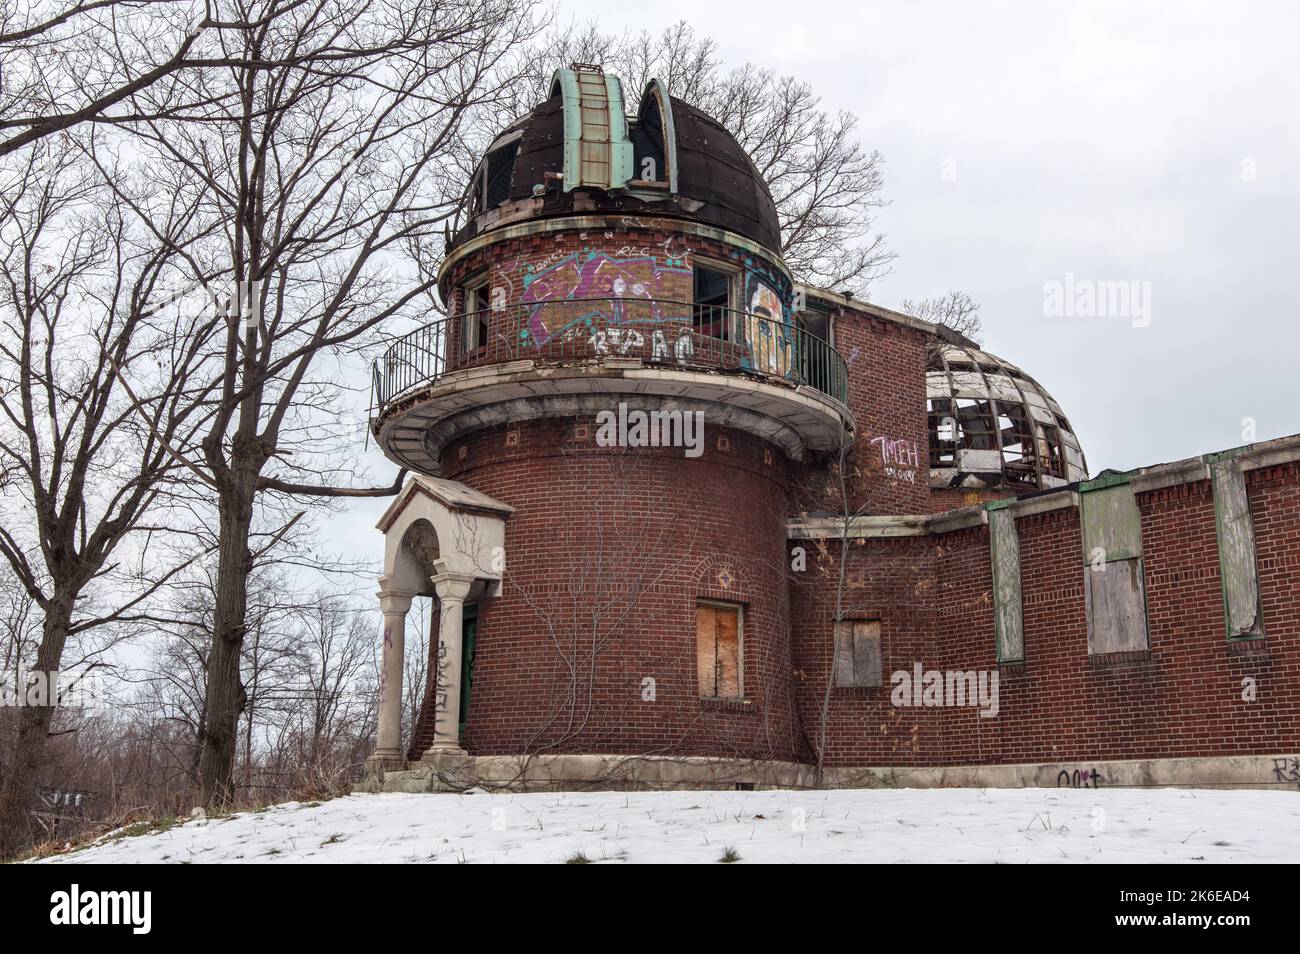 Abandoned Warner and Swasey Observatory, Cleveland, Ohio, USA Stock Photo